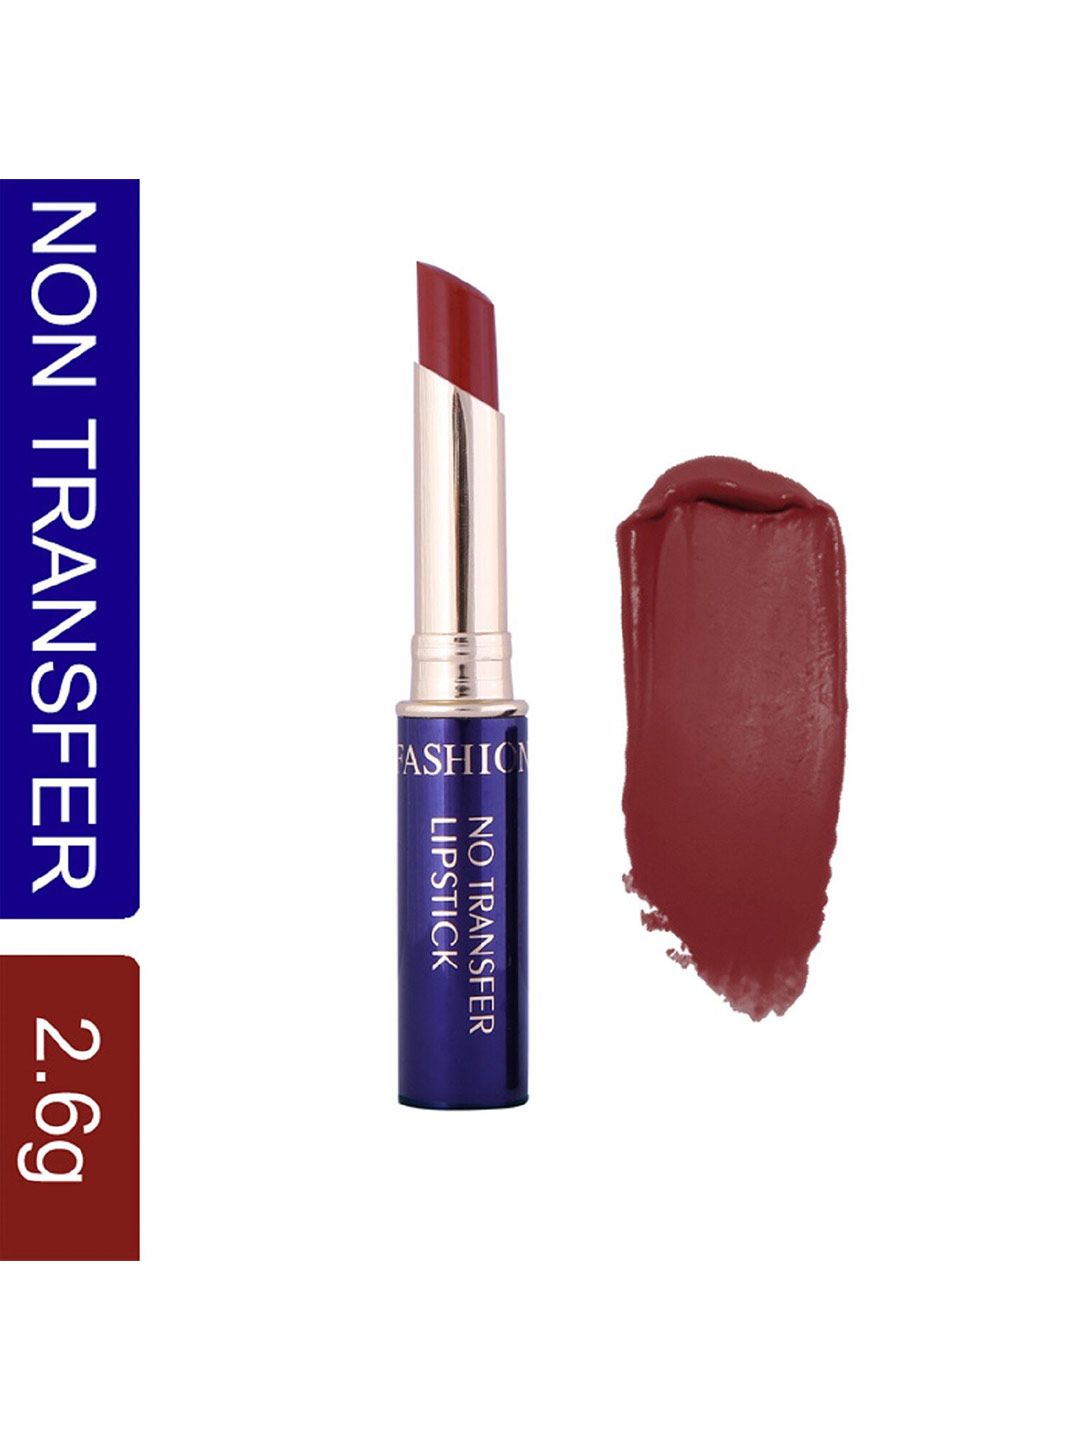 Fashion Colour No Transfer Matte Waterproof Lipstick 2.6 g - Red Iron 43 Price in India